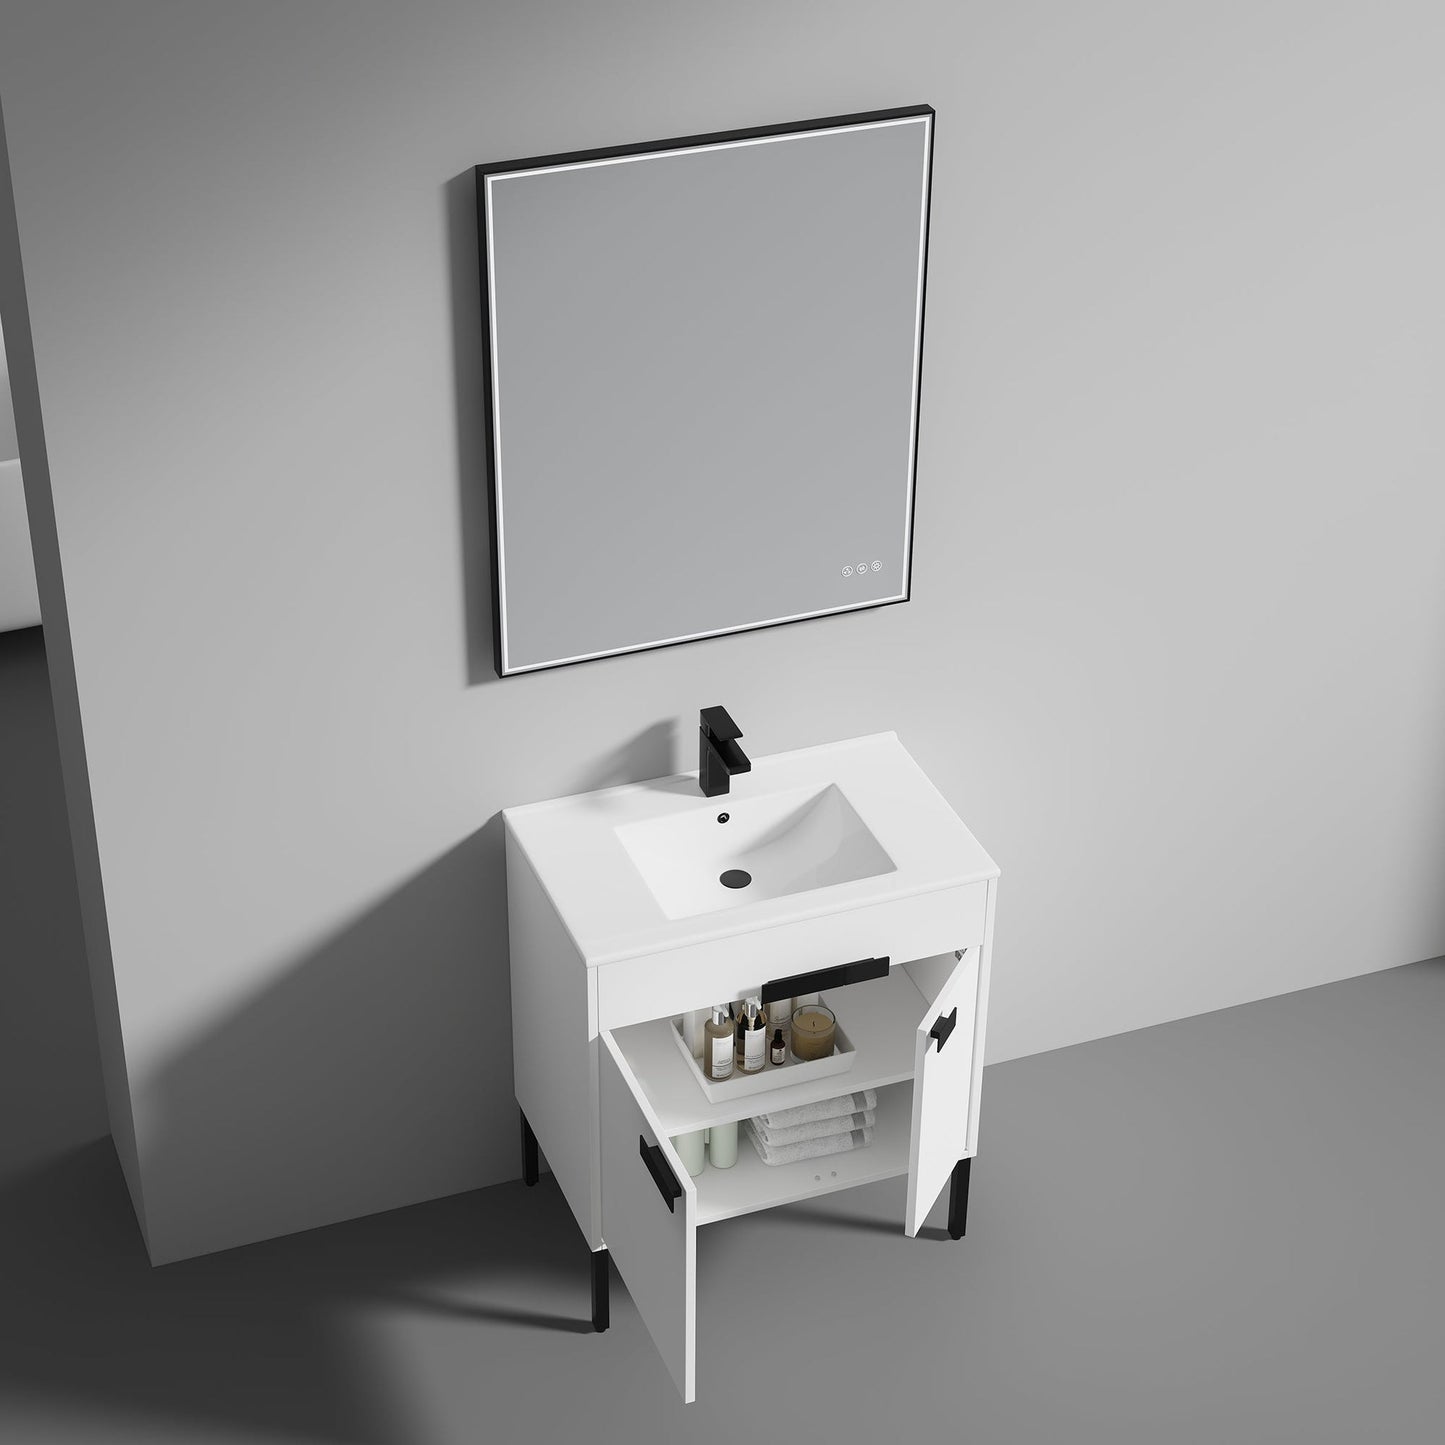 Blossom Bari 30" 2-Door White Freestanding Single Vanity Base With Adjustable Shelf, Matte Black Handles & Legs